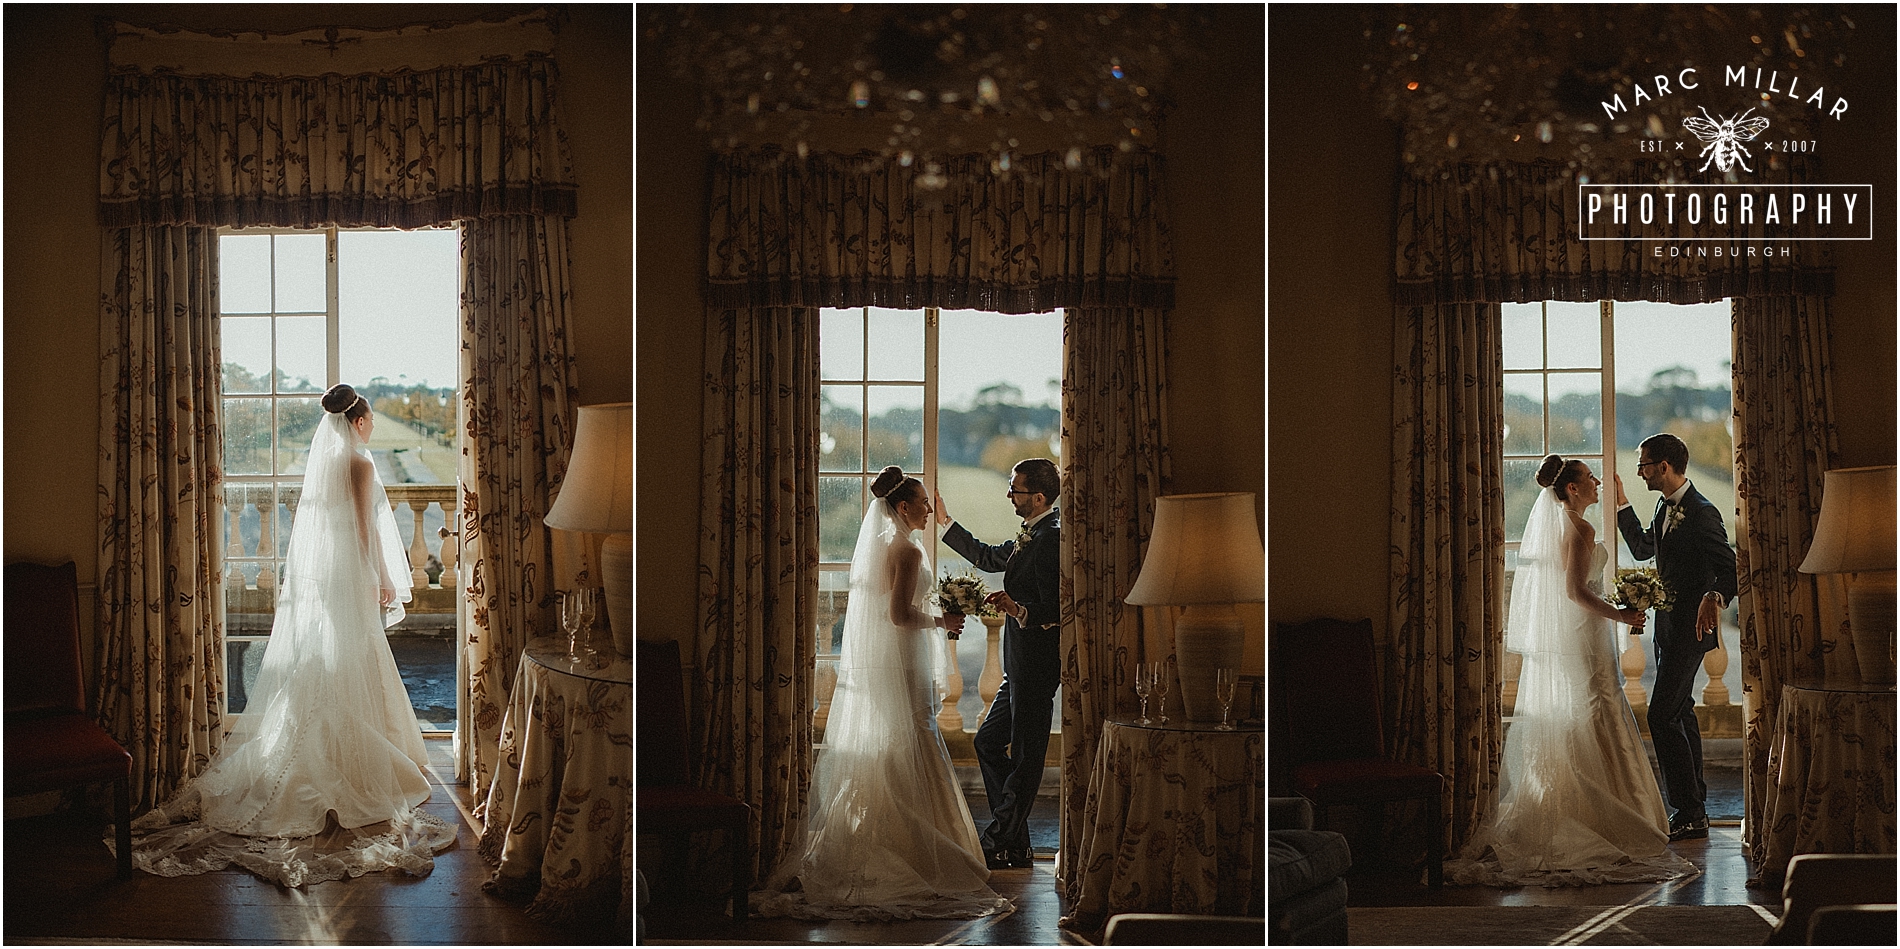  Archerfield House  Wedding Shoot by Marc Millar Photography 